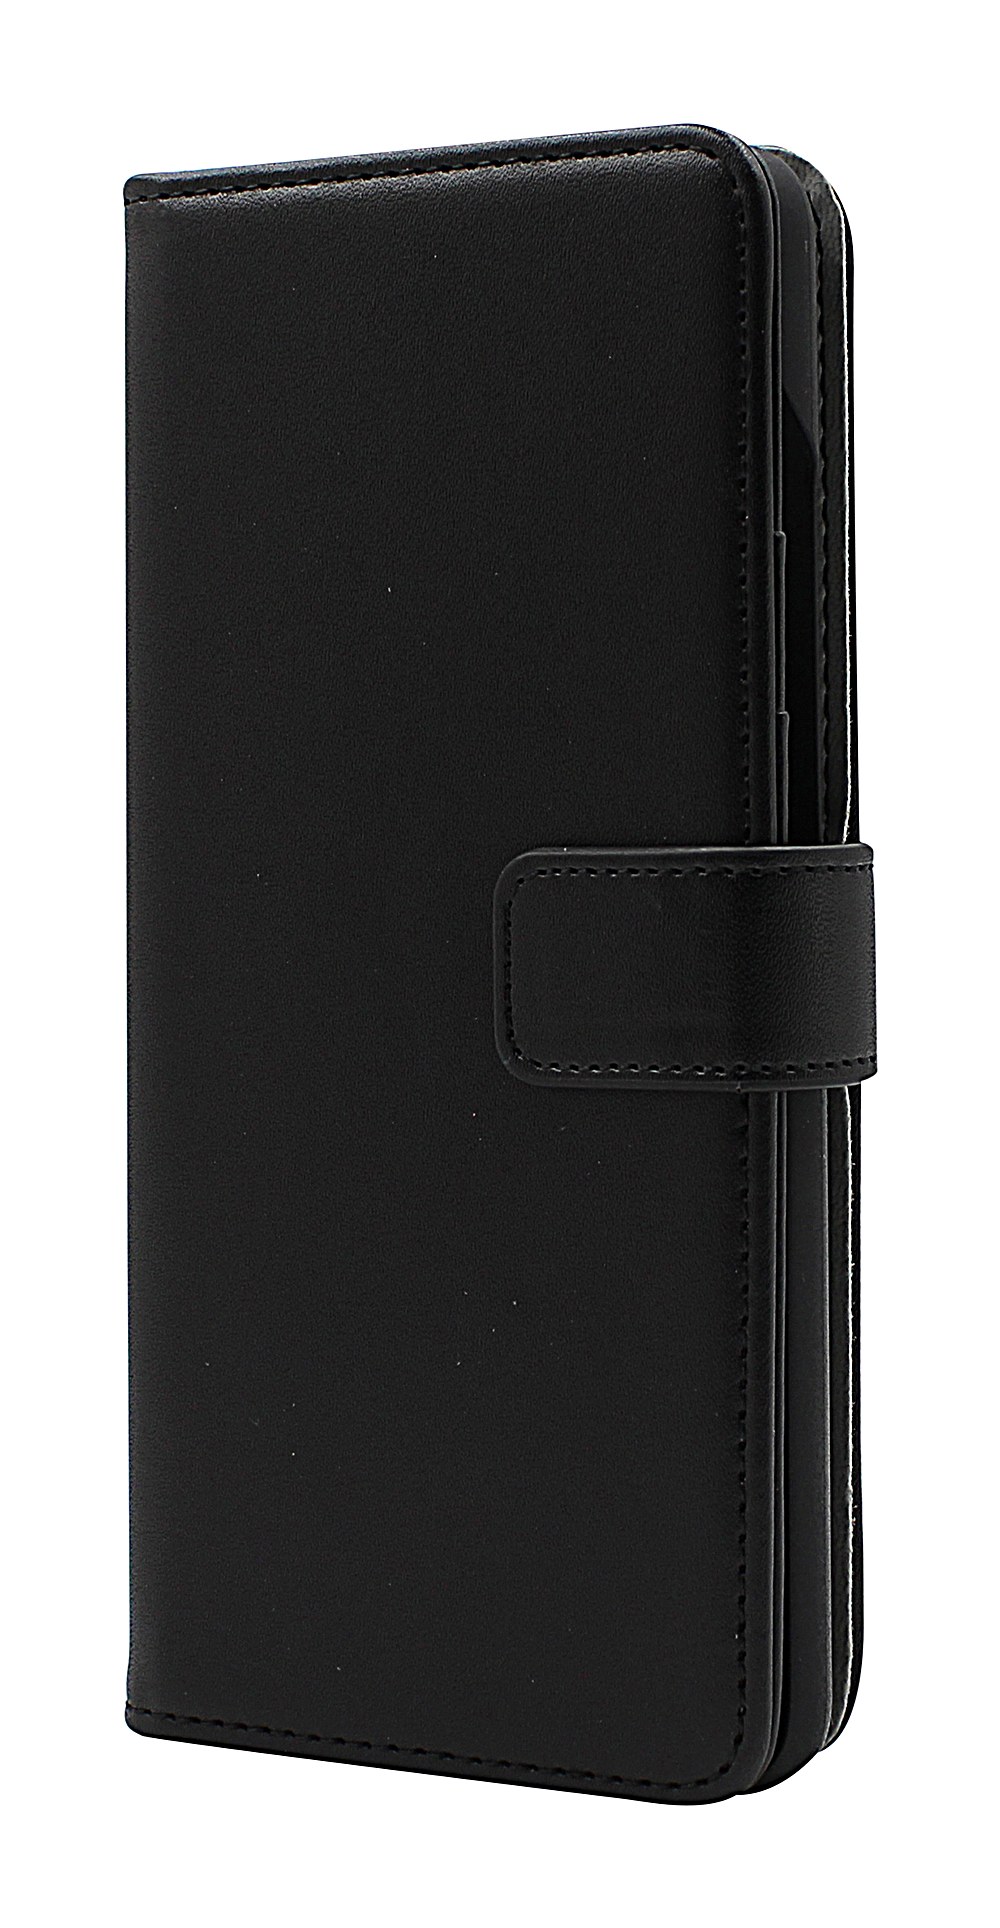 Skimblocker Magnet Wallet Xiaomi Mi 10T Lite